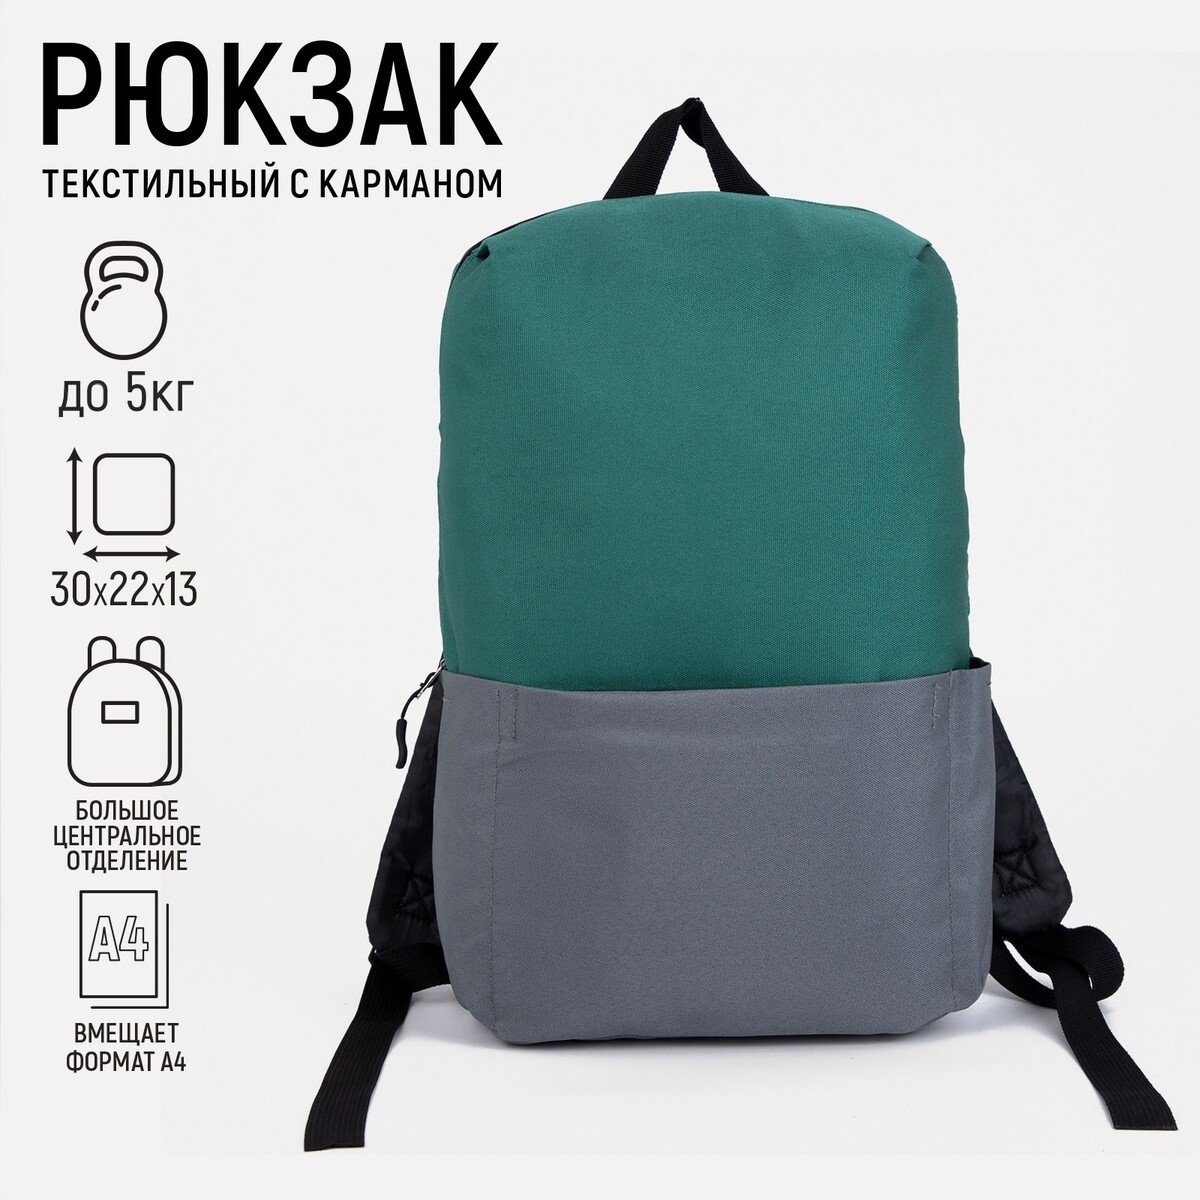 Рюкзак текстильный с карманом, серый/зеленый, 22х13х30 см рюкзак текстильный с ным карманом 30х39х12 см бордовый